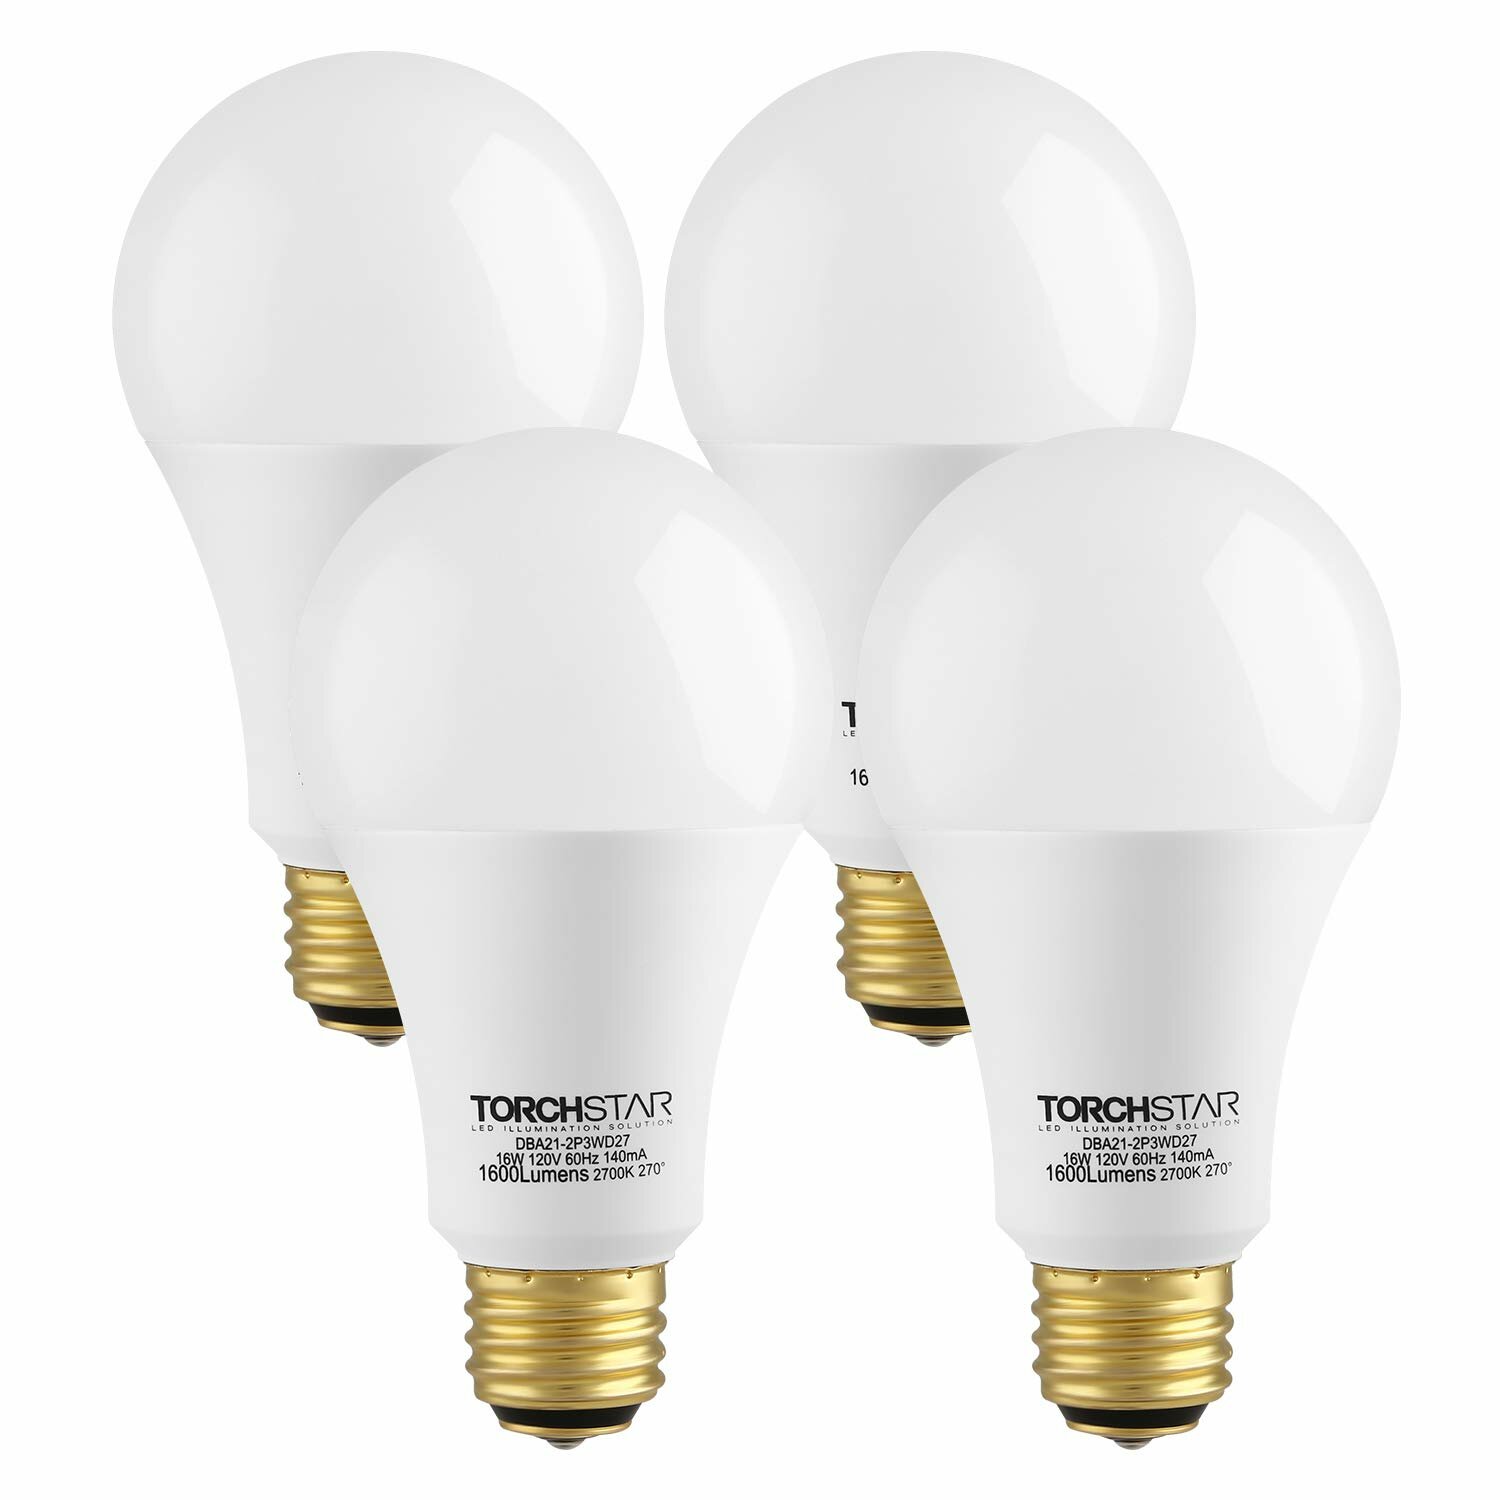 dimmable light bulbs